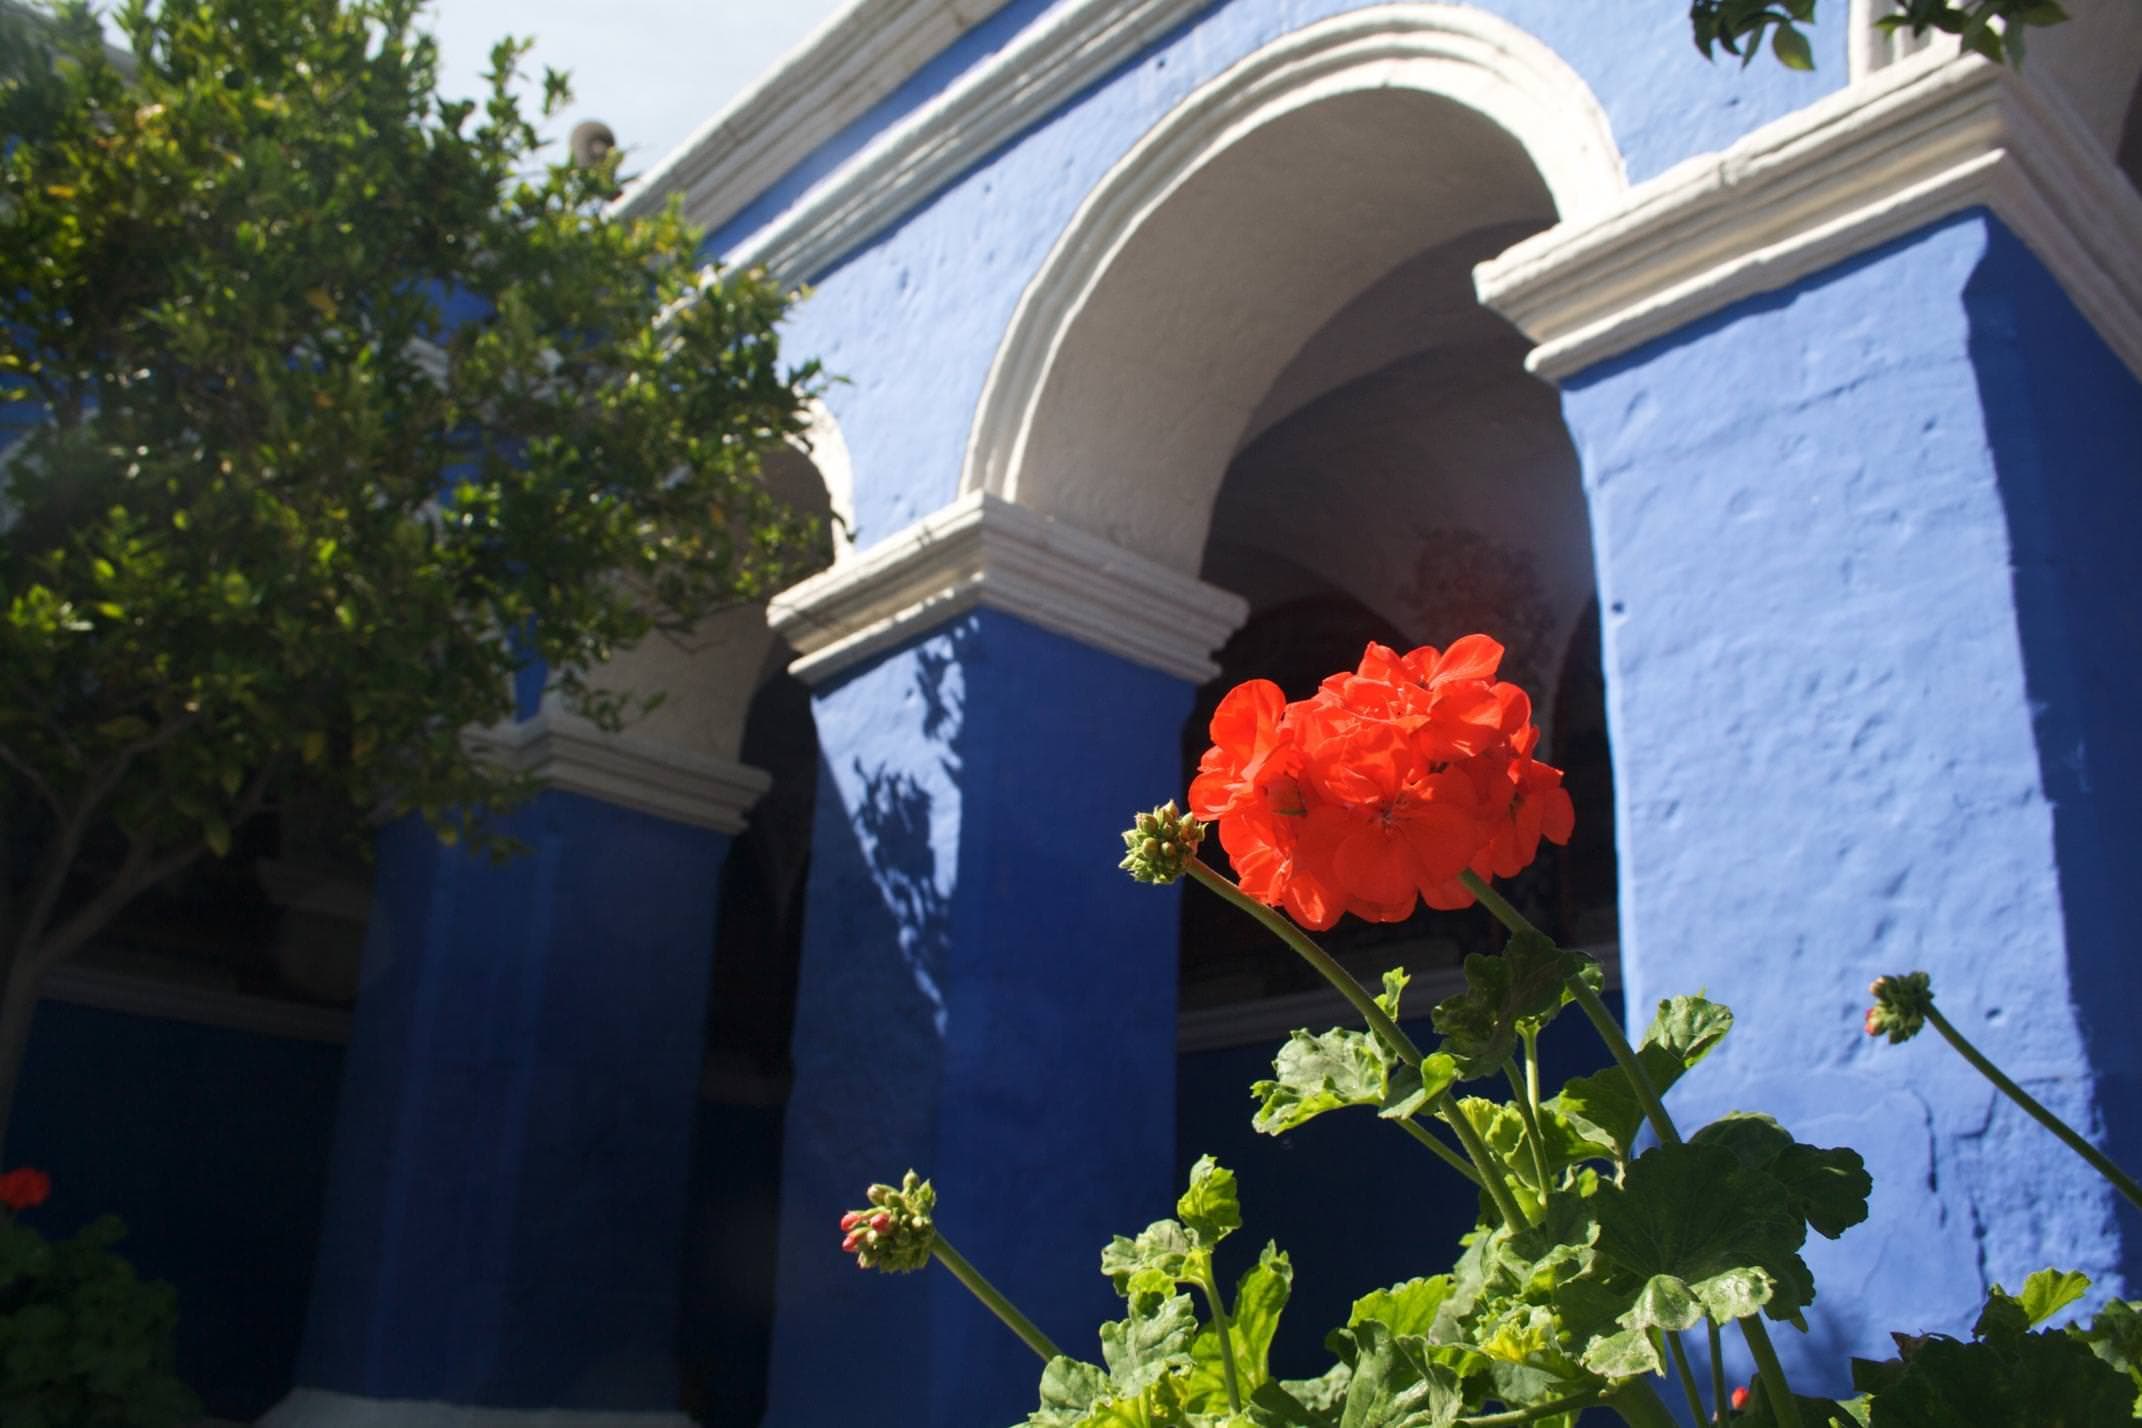 Peru arequipa geranium against blue wall of santa catalina convent